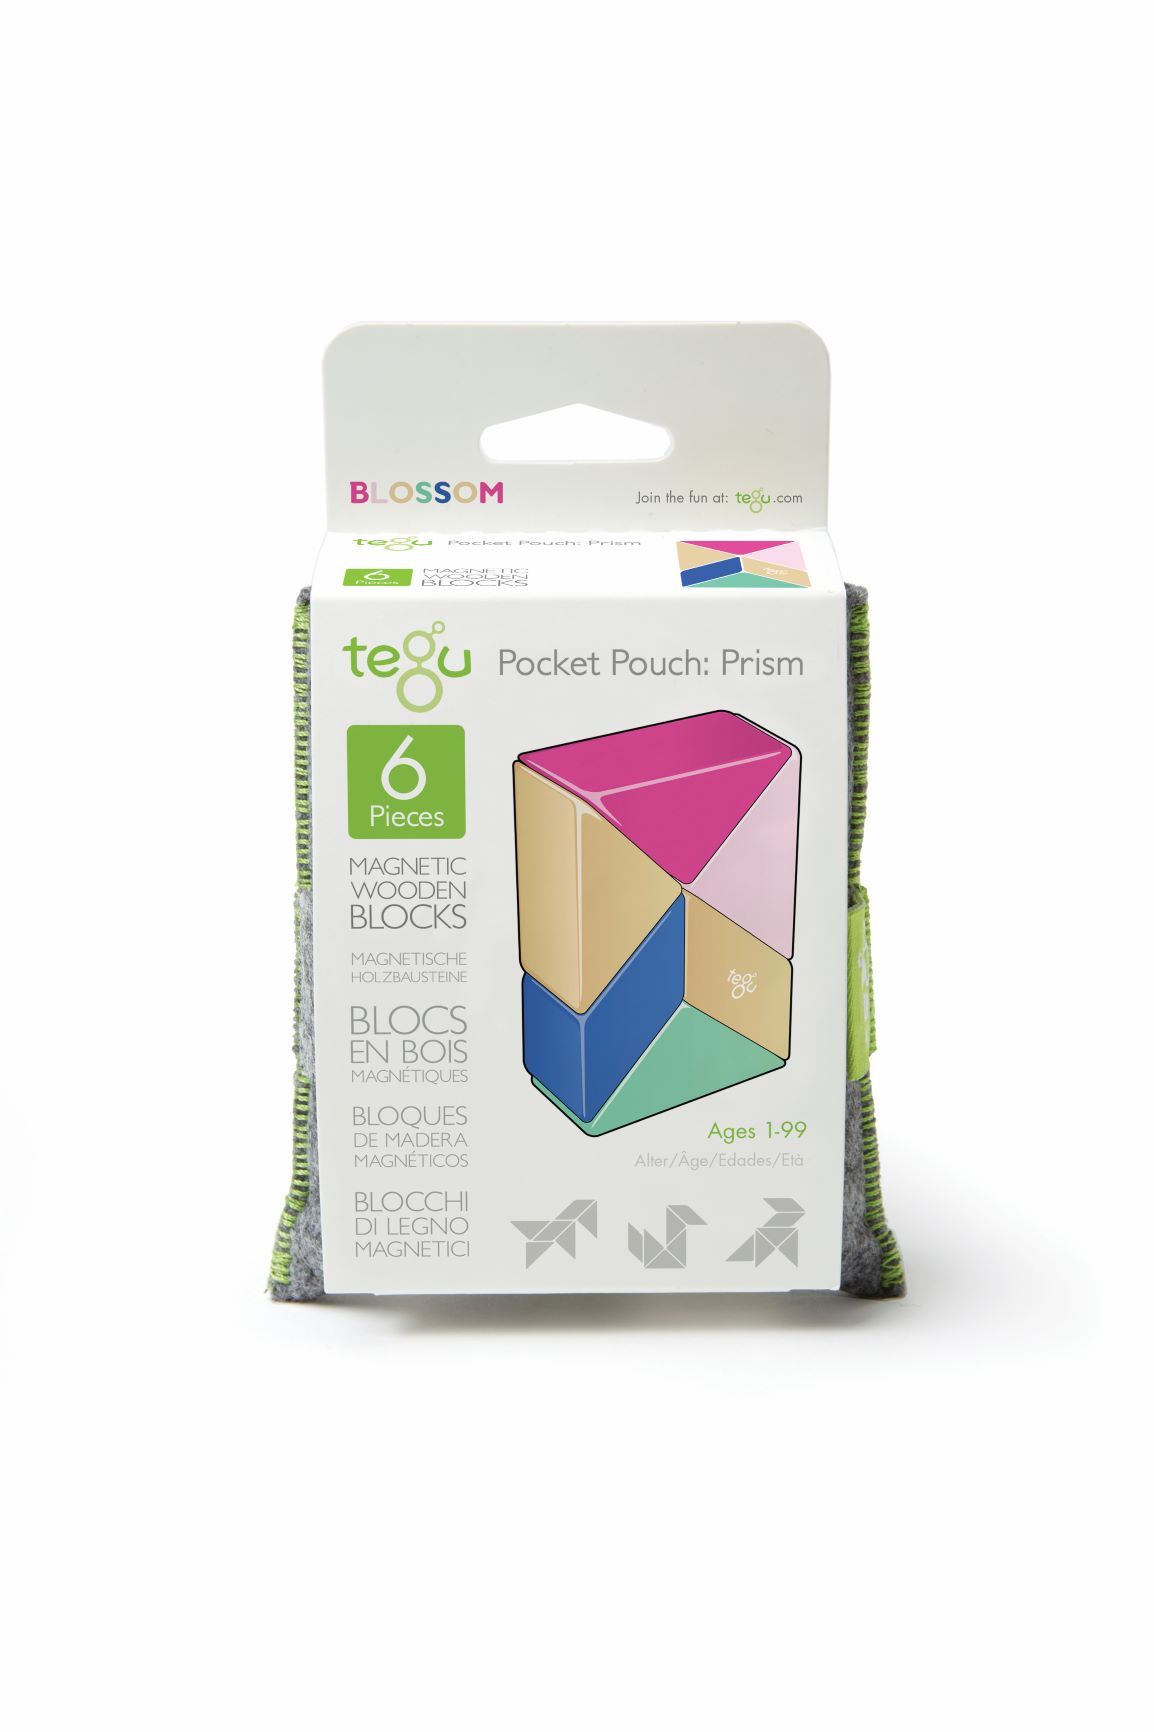 Tegu Magnetic Wooden Blocks - Pocket Pouch Prism 6pc